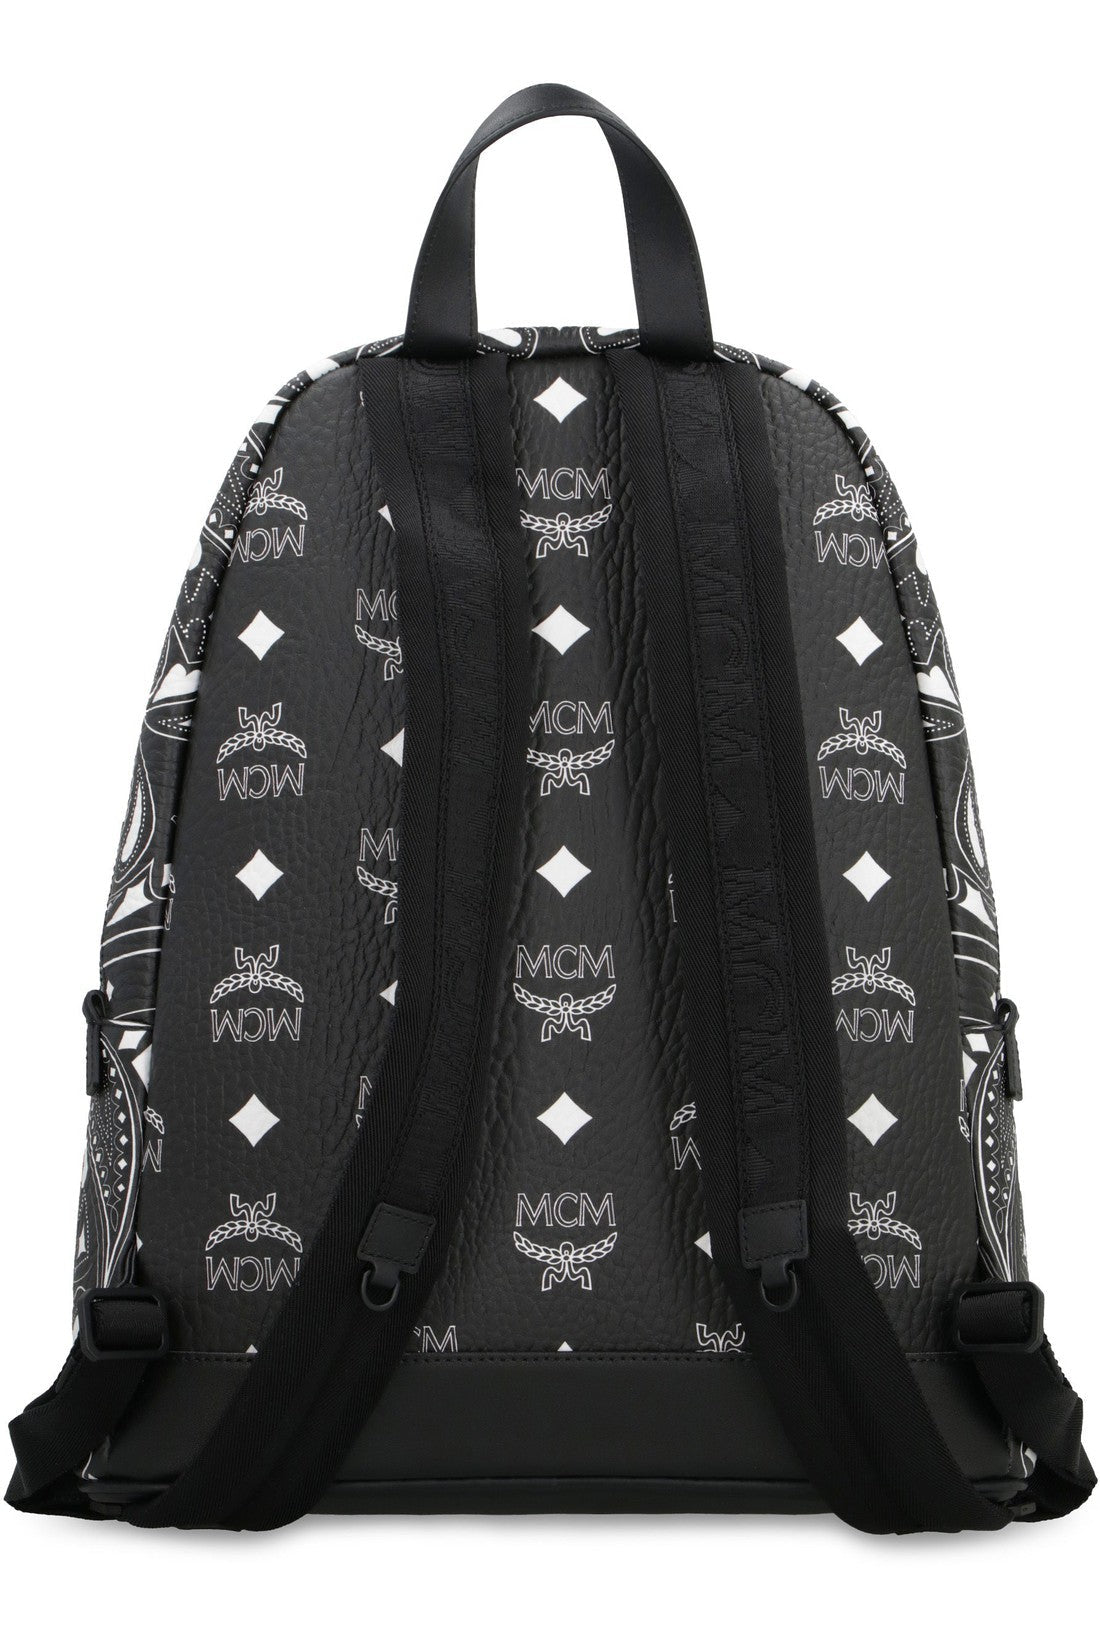 MCM-OUTLET-SALE-Stark faux leather backpack-ARCHIVIST